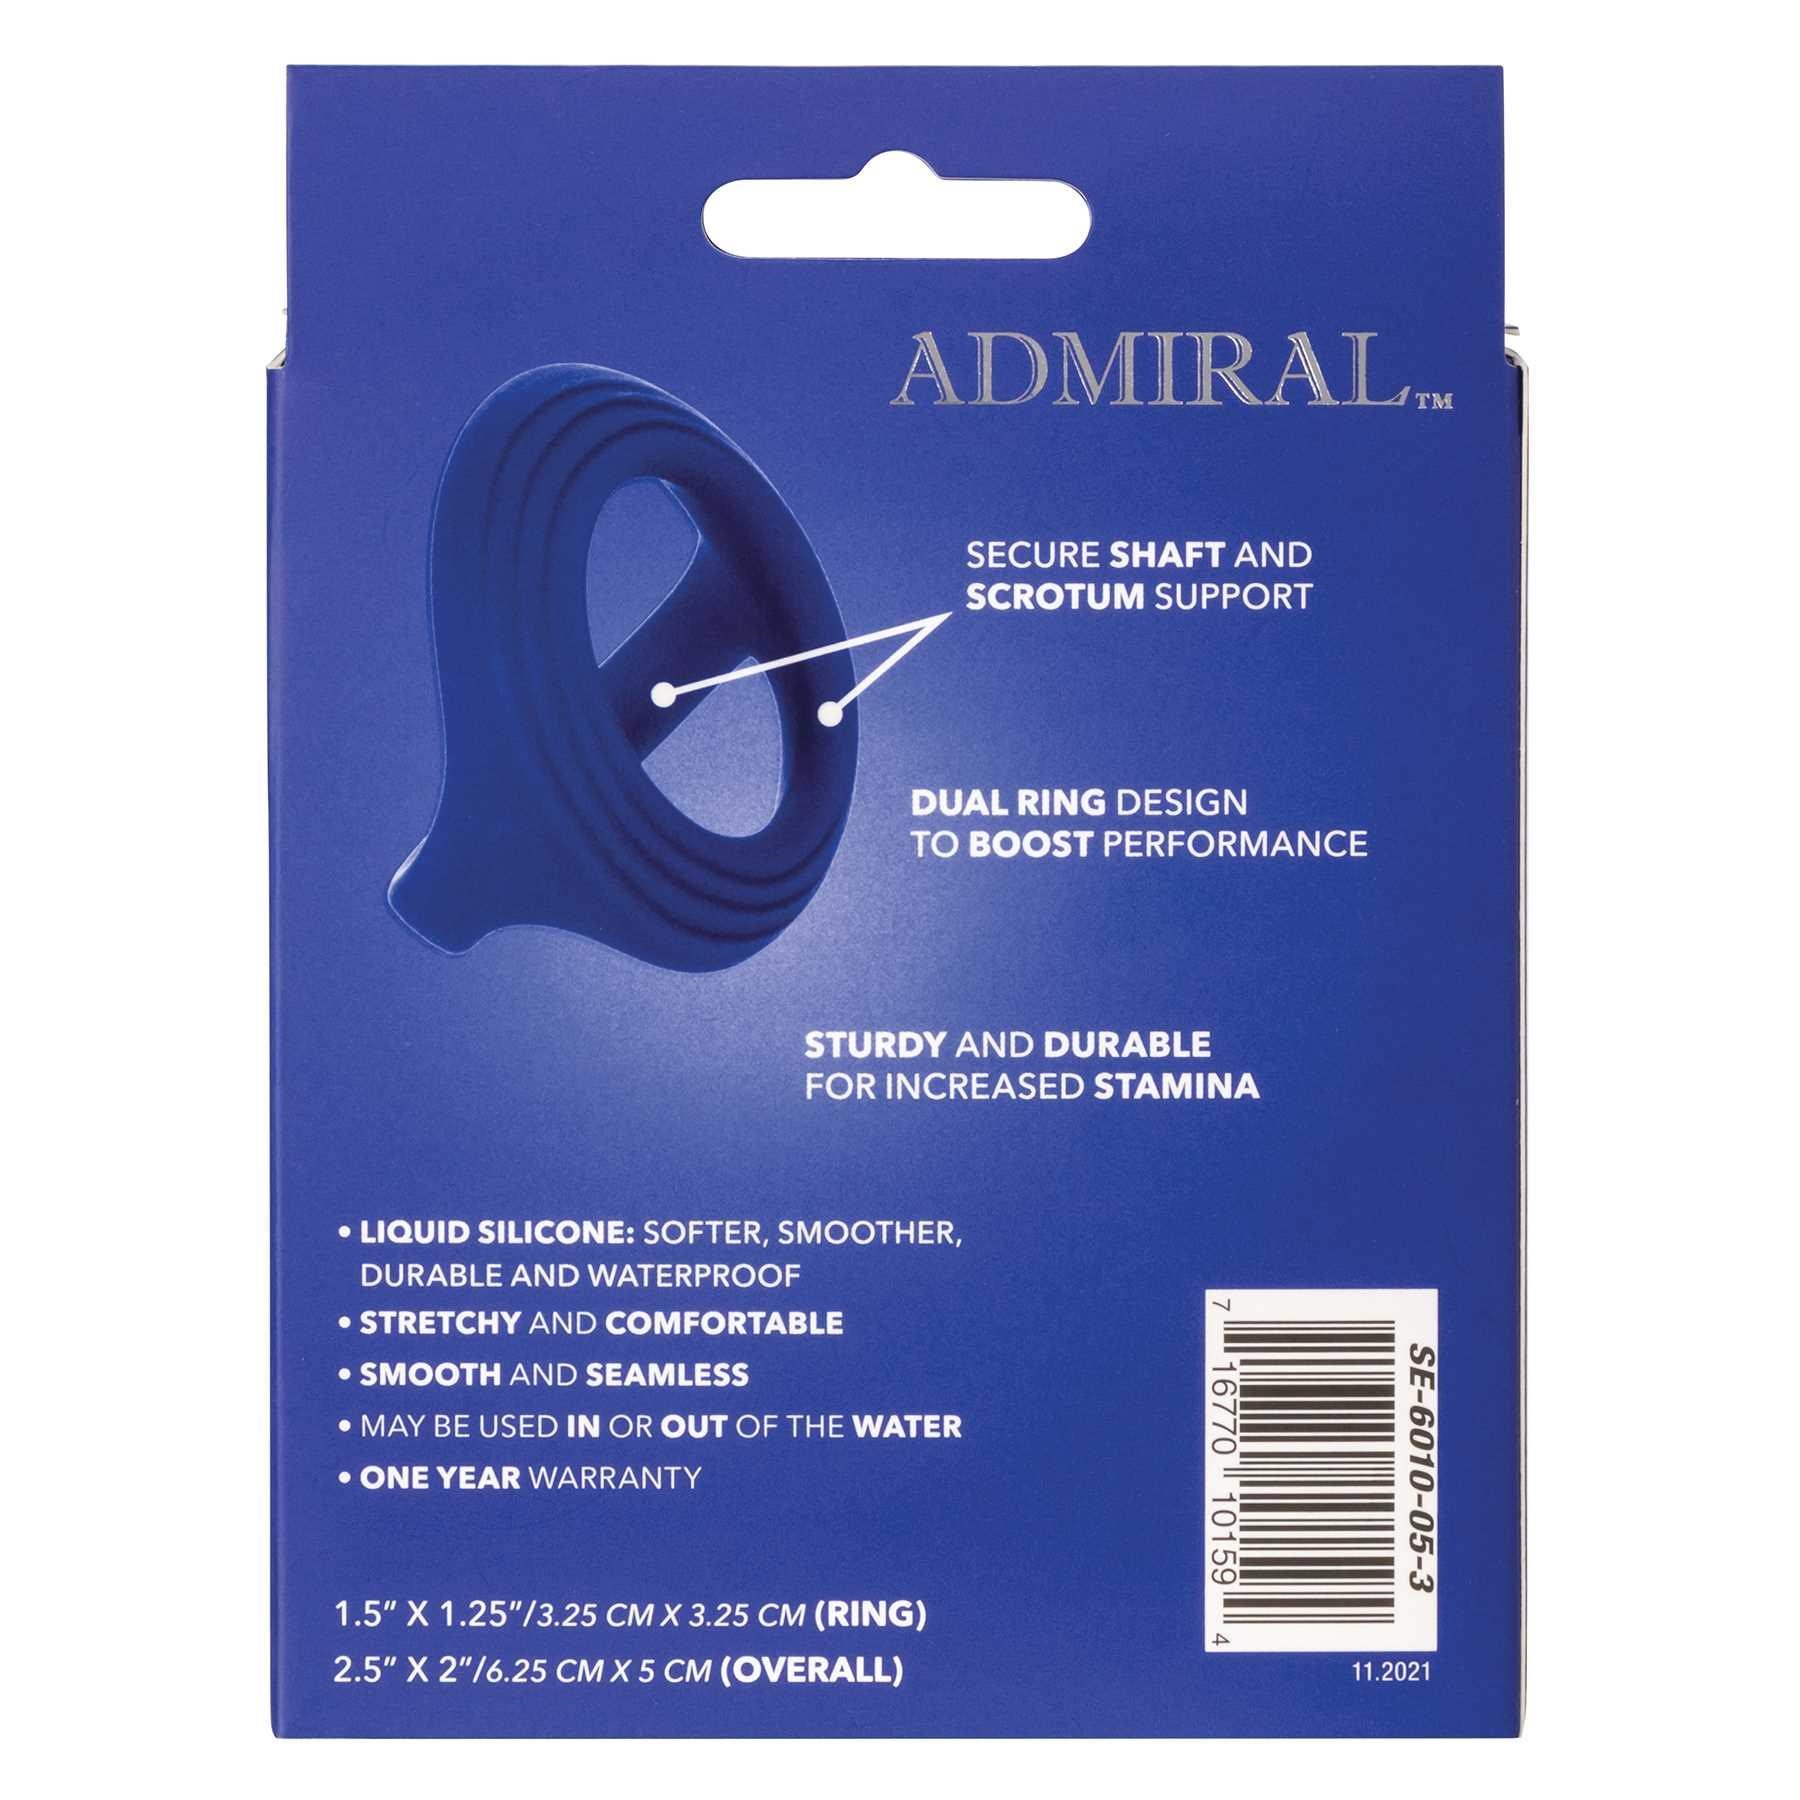 Admiral Cock & Ball Dual Ring rear box packaging